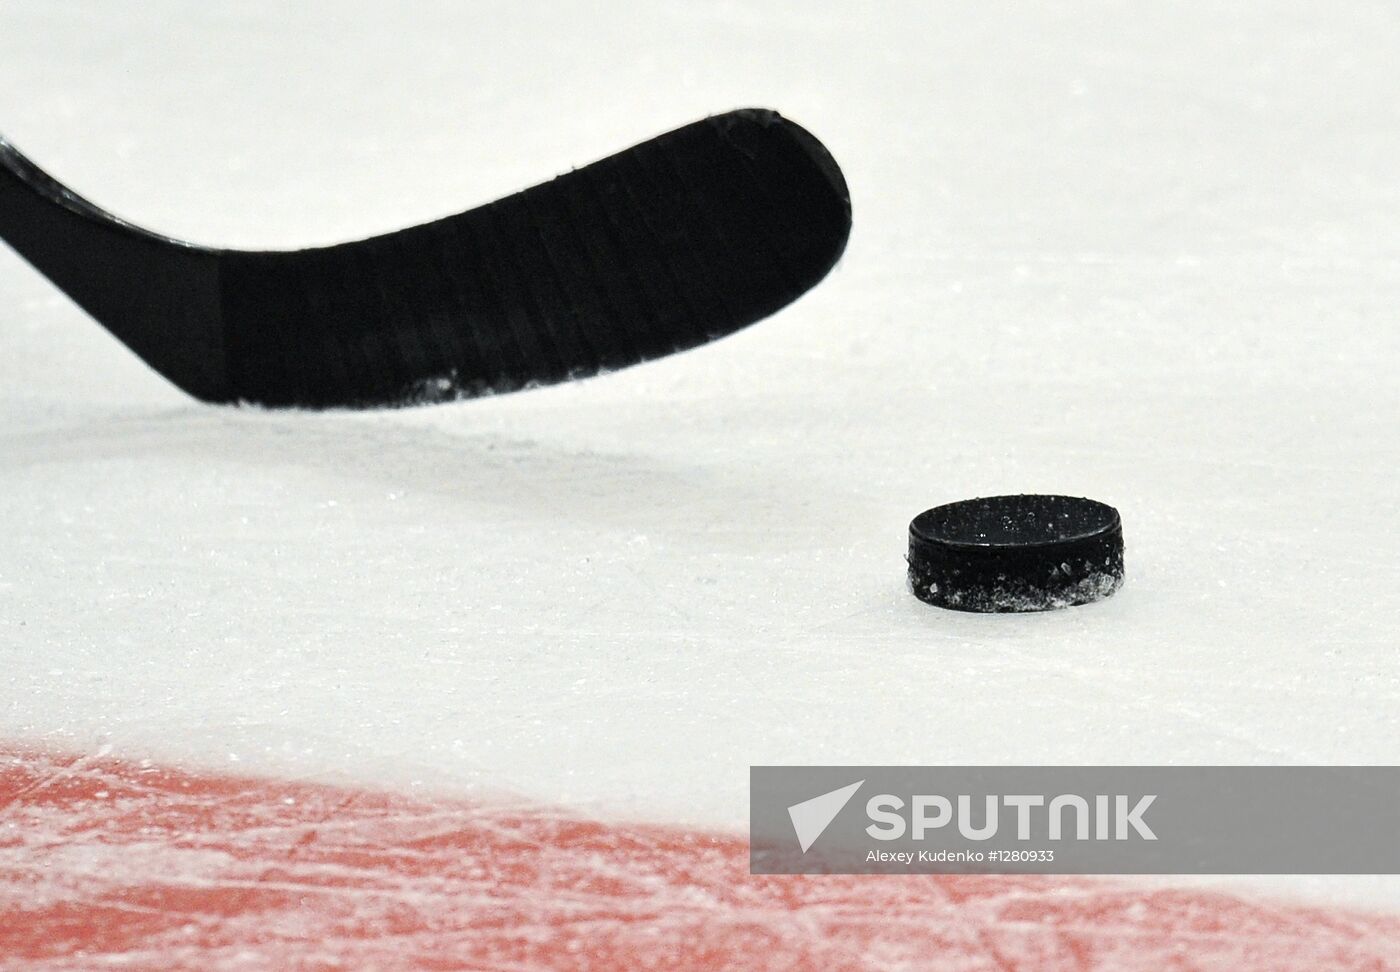 Russian ice hockey team training for Karjala Cup, EHT